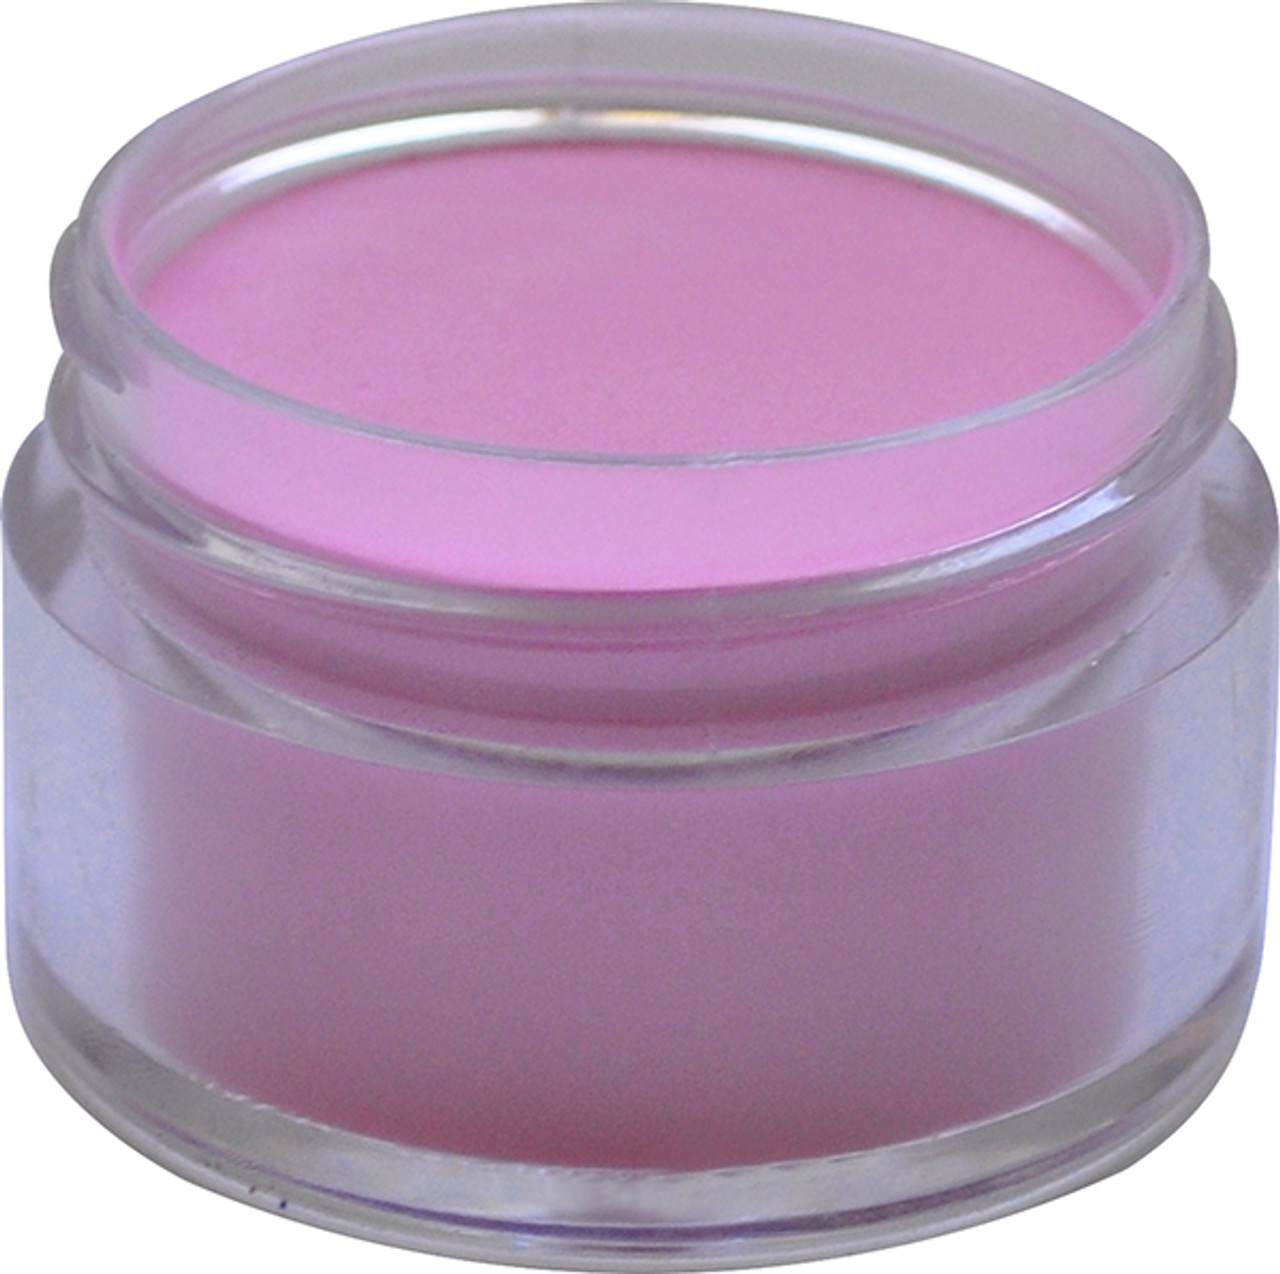 U2 Winter Color Powder - Hot Pink - 1/2 oz